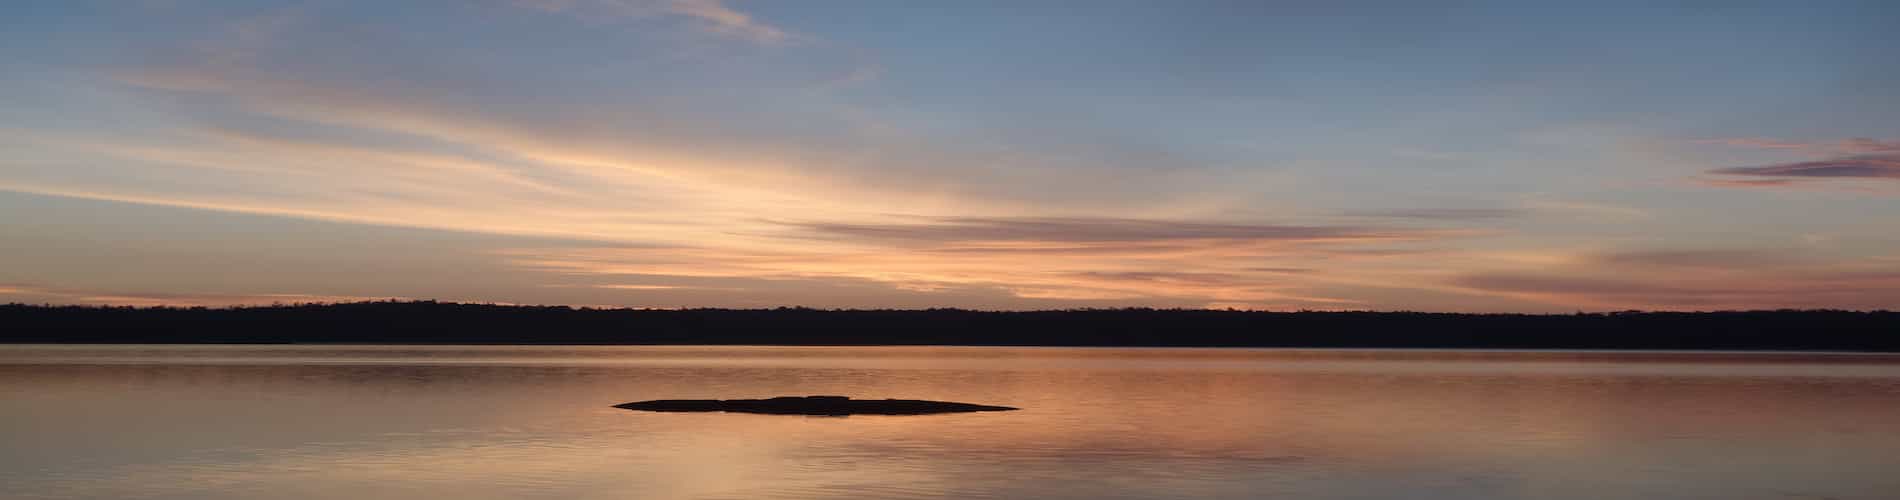 wide-shot-sunset-over-lake